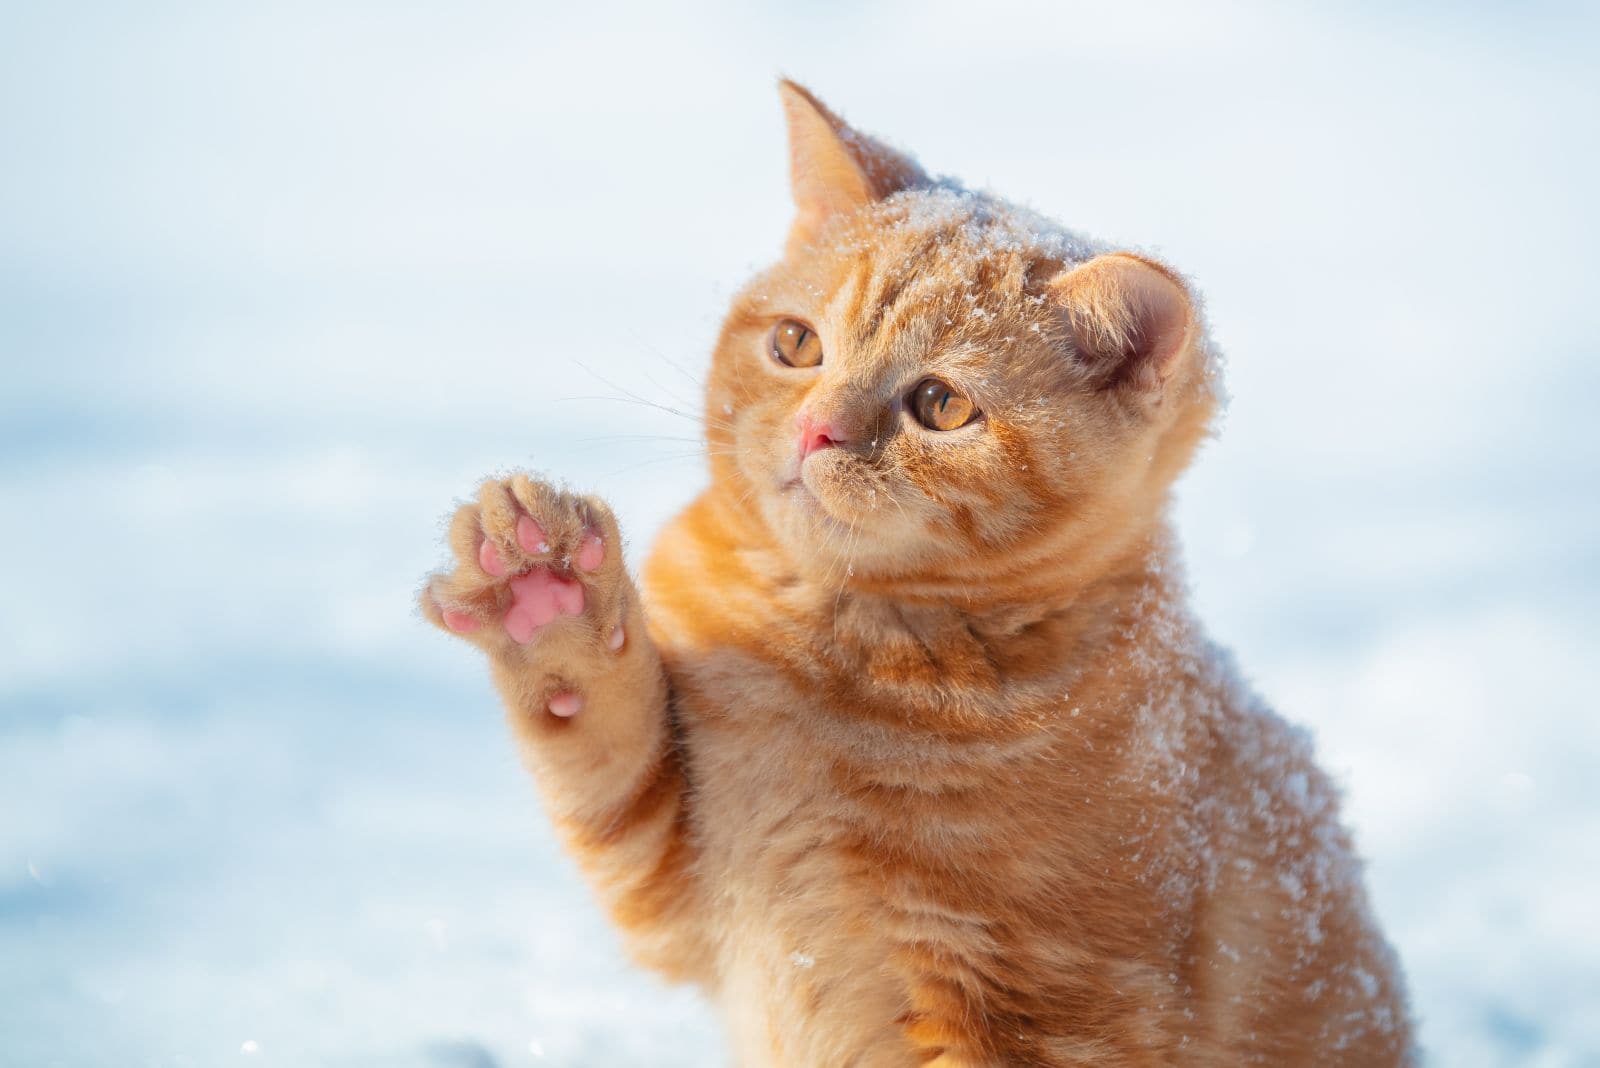 ginger cat in snow